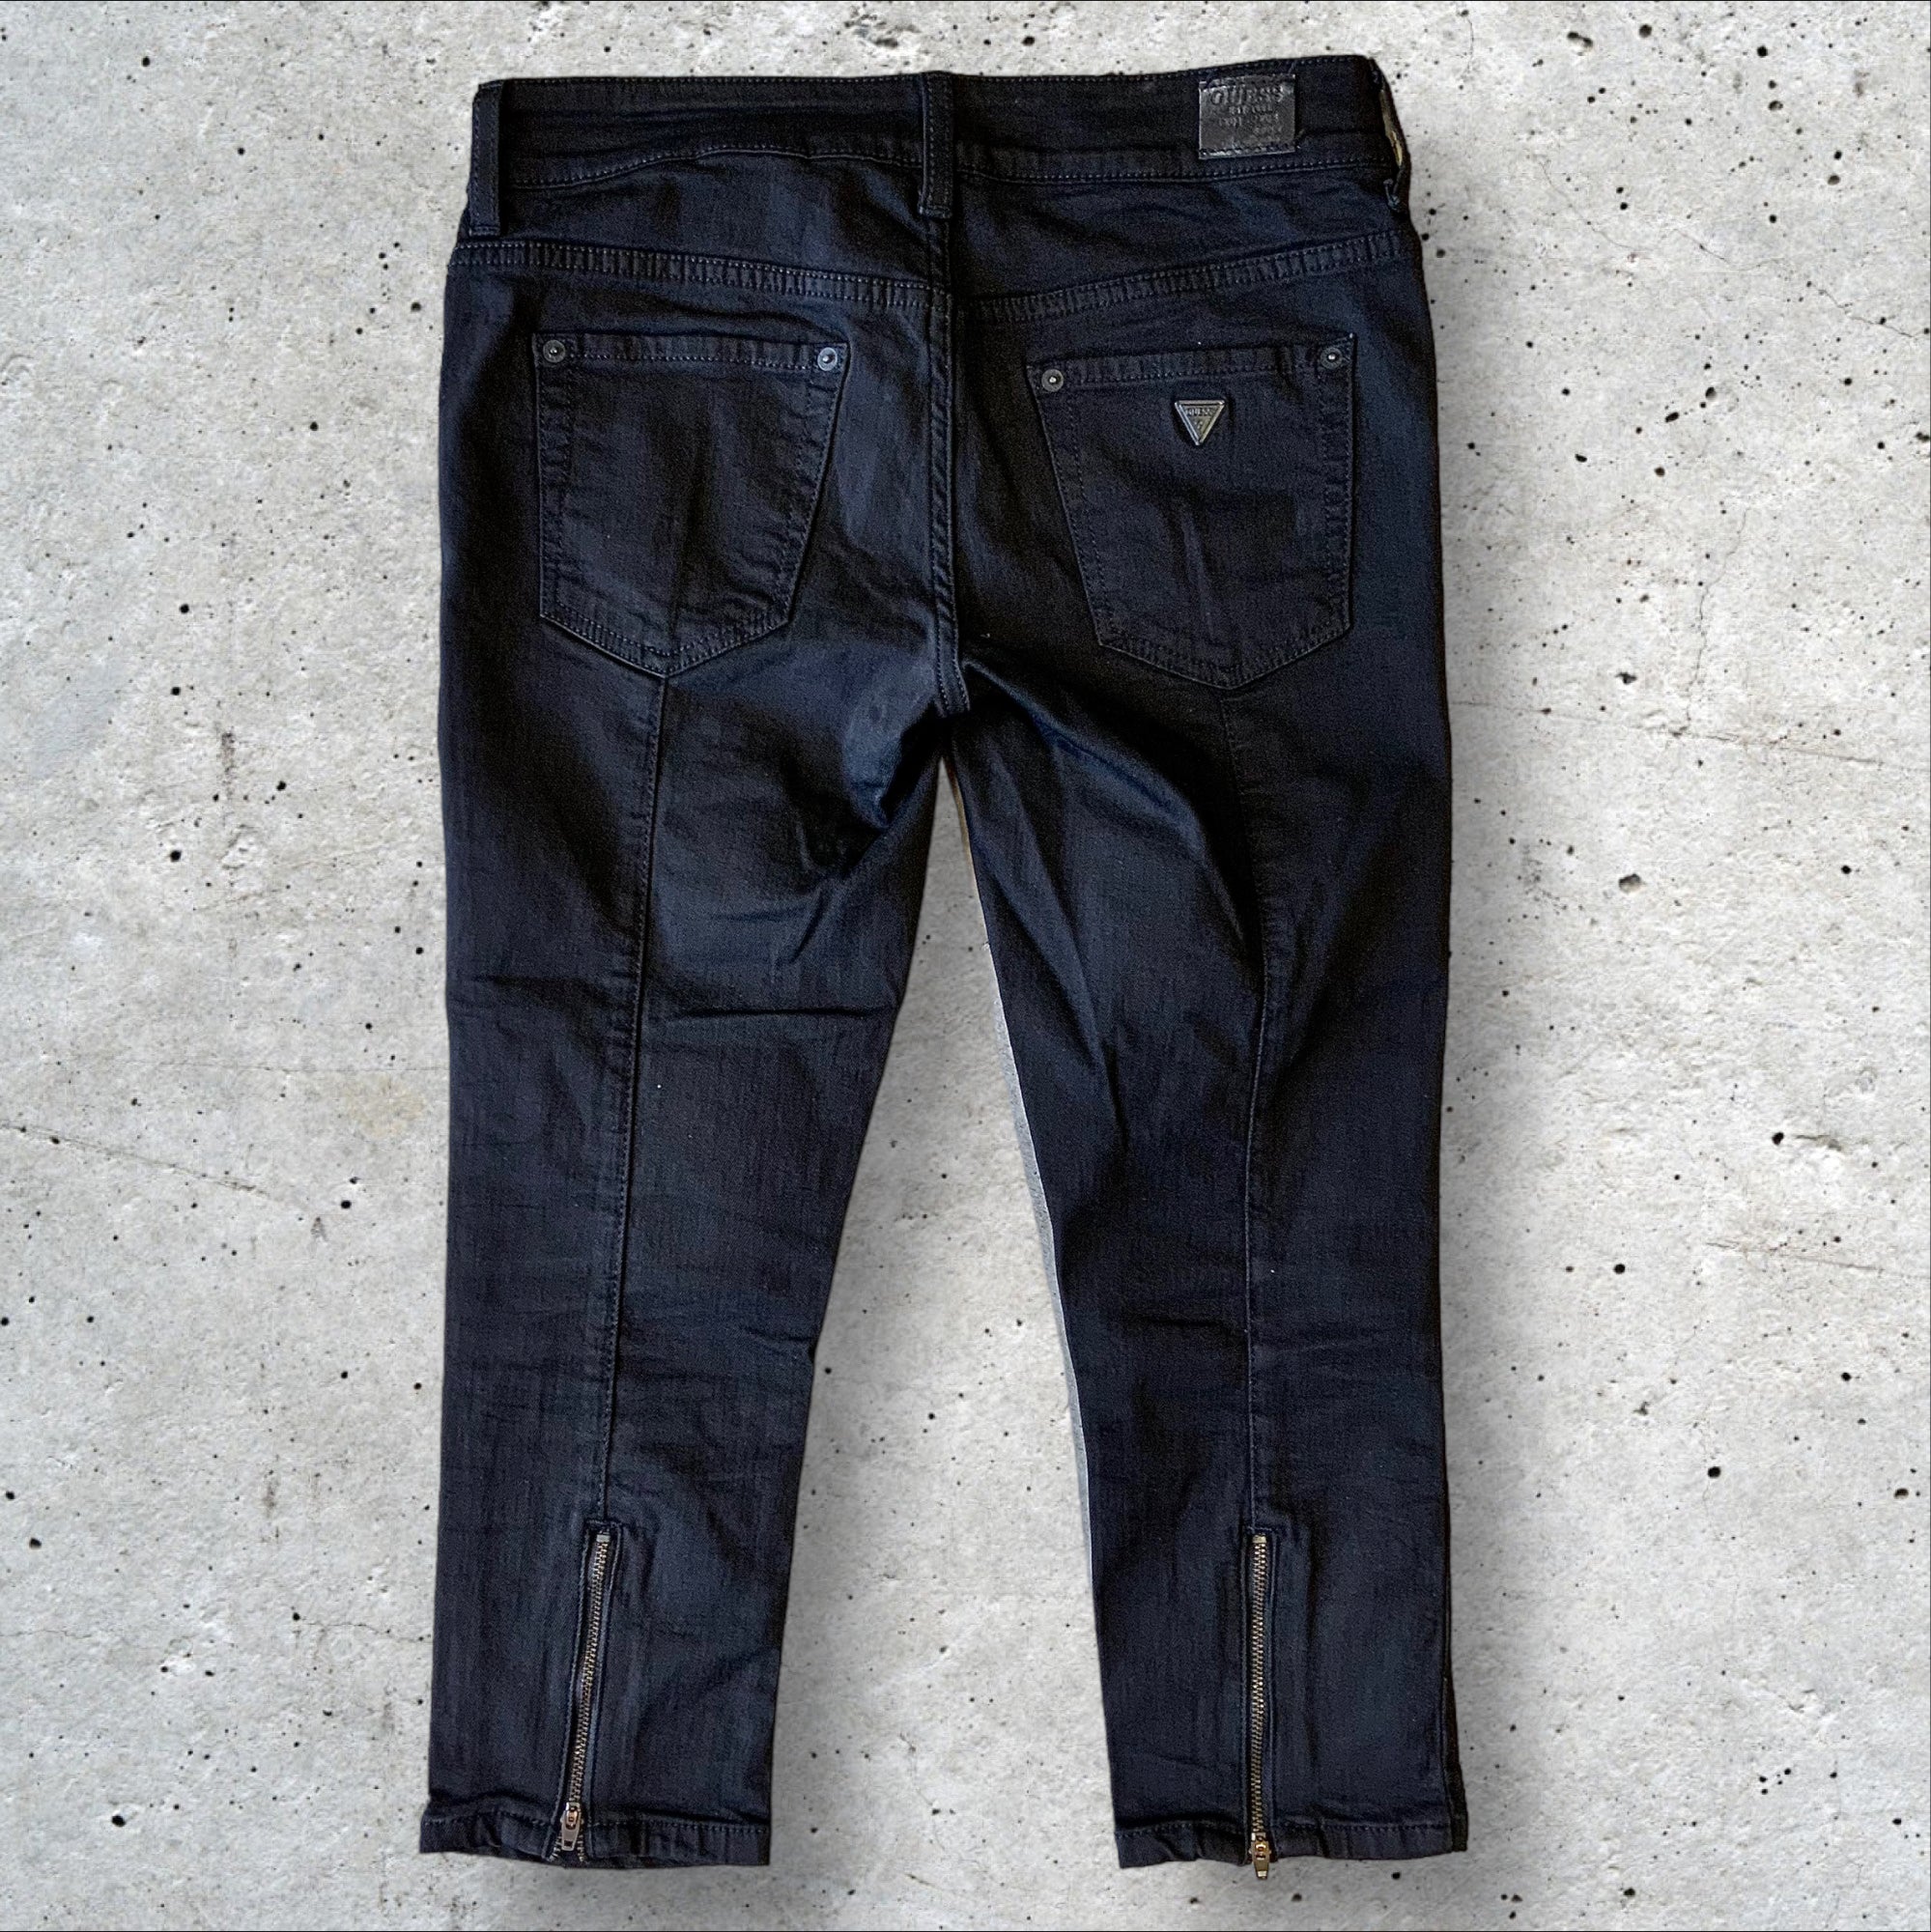 GUESS Women's Black 3/4 Zip Detail Cropped Jeans, Size 28